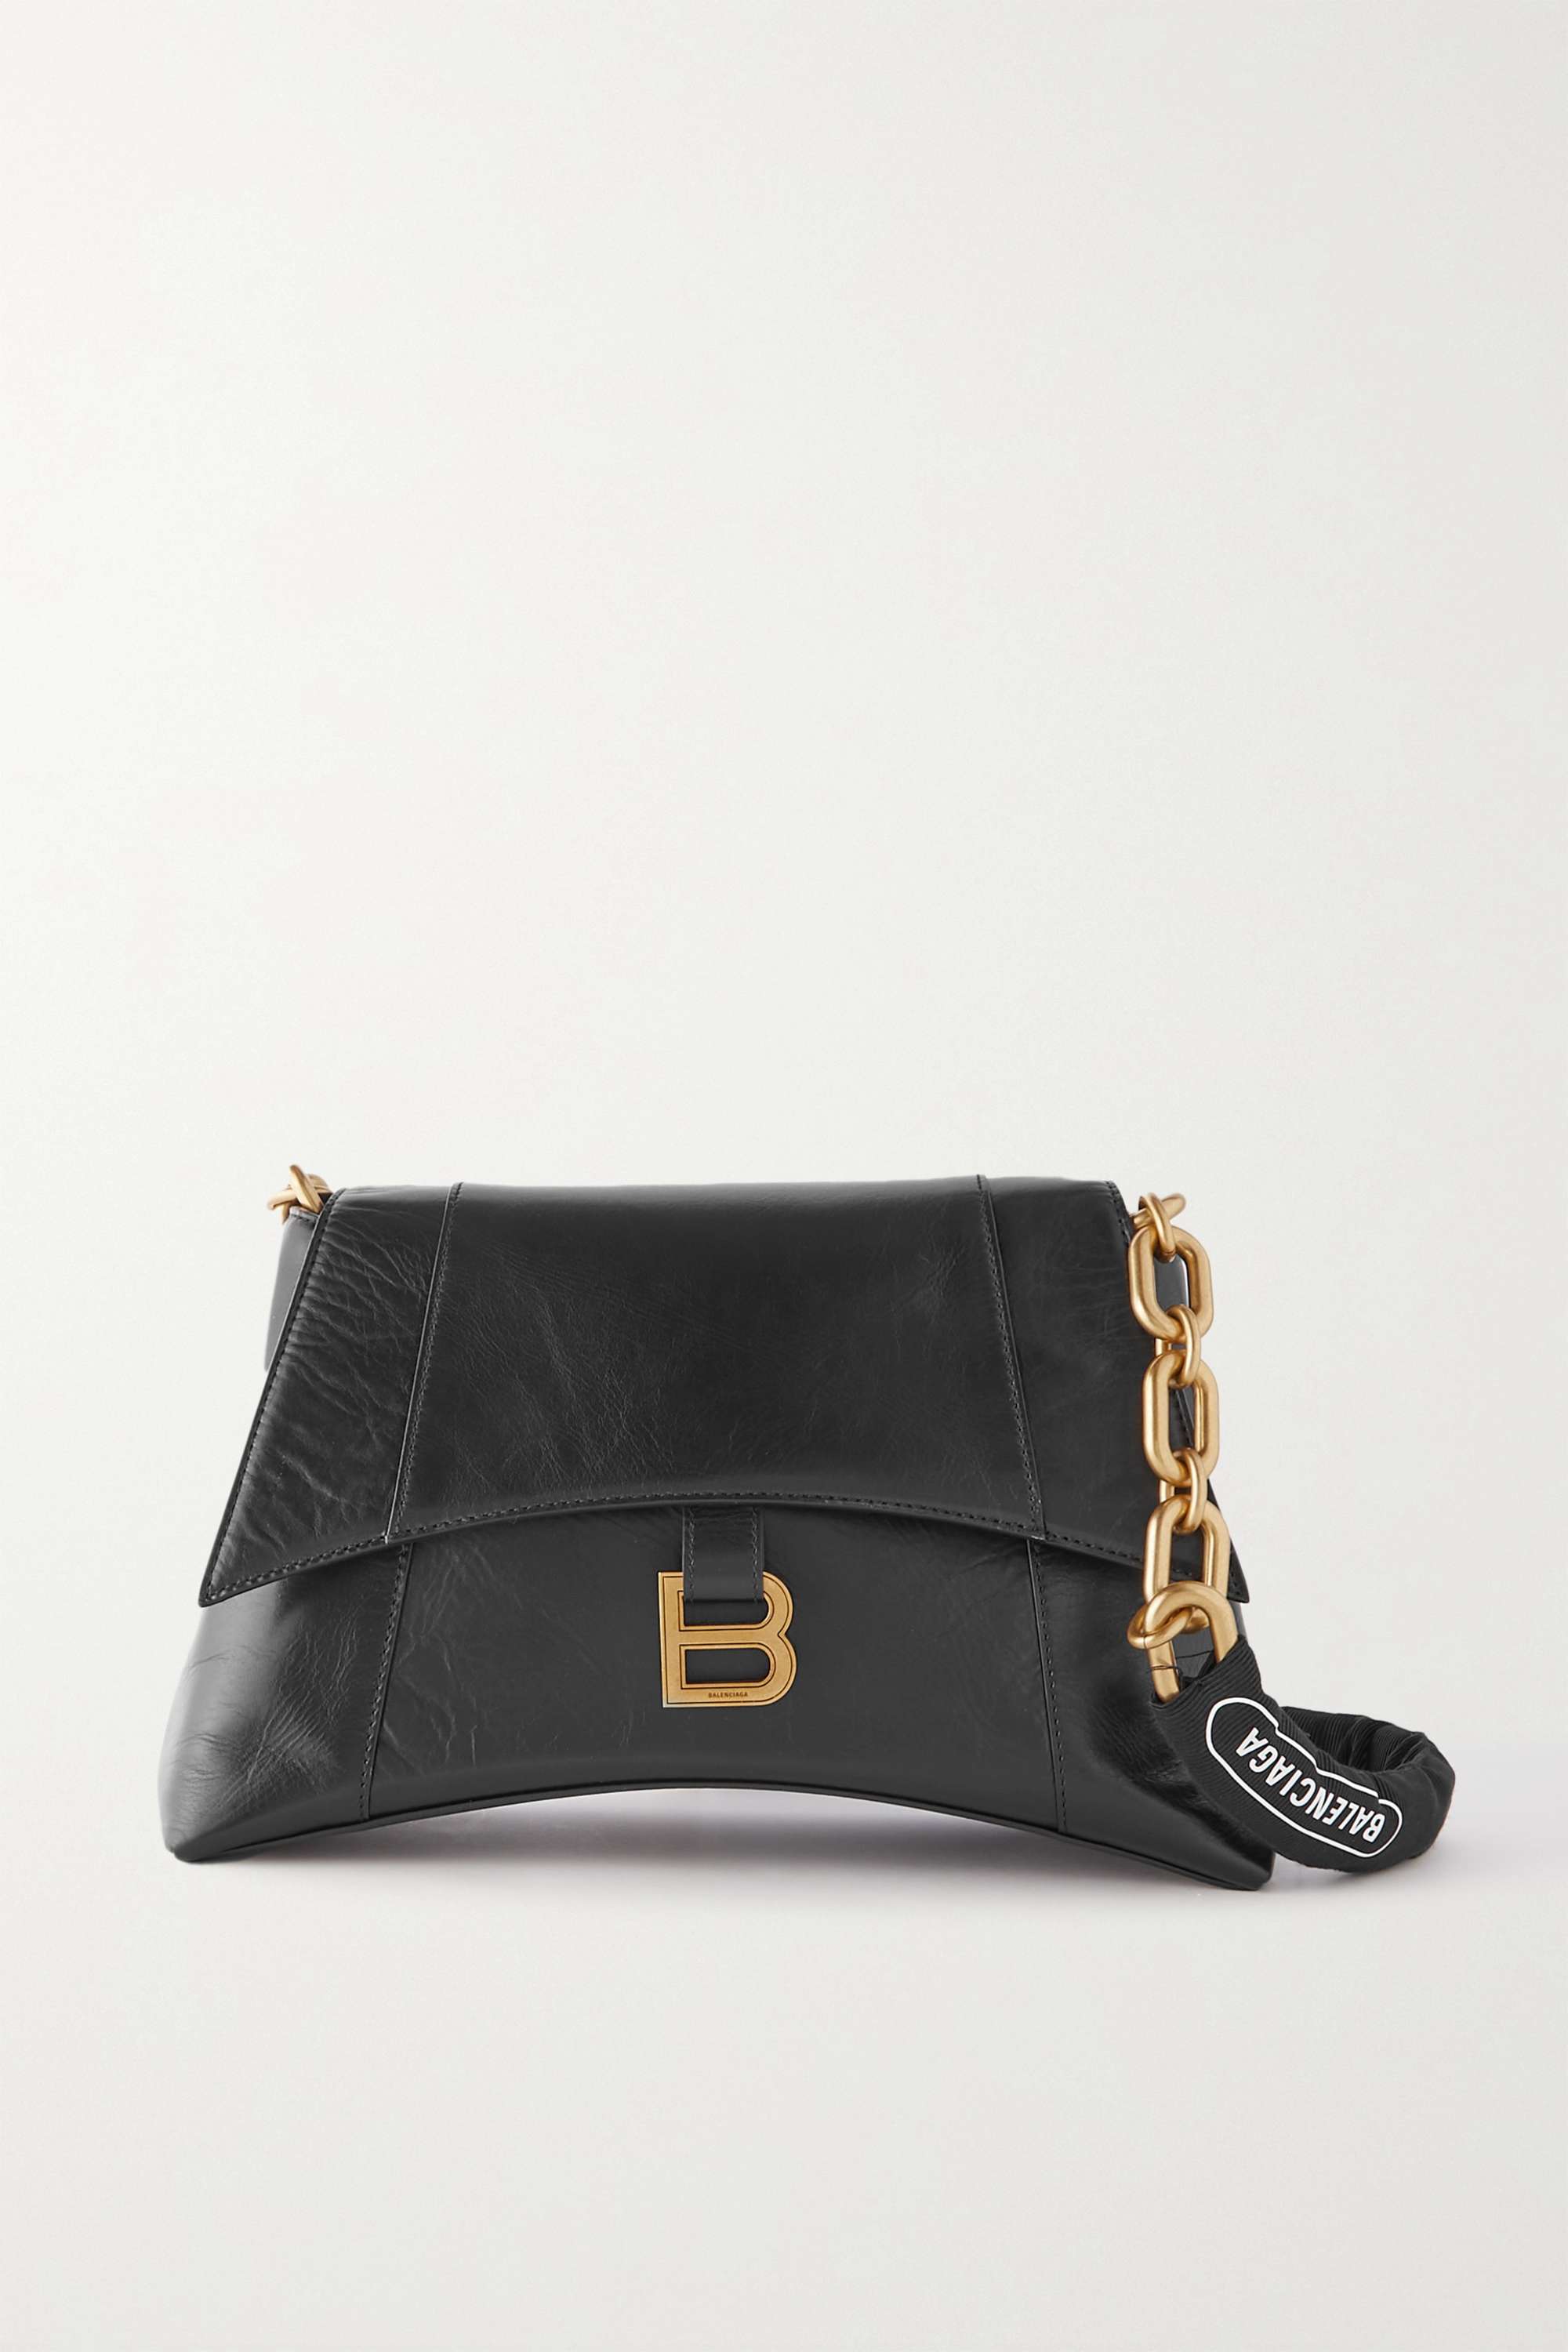 Balenciaga Lindsay Small Buckled Metallic Crinkled-leather